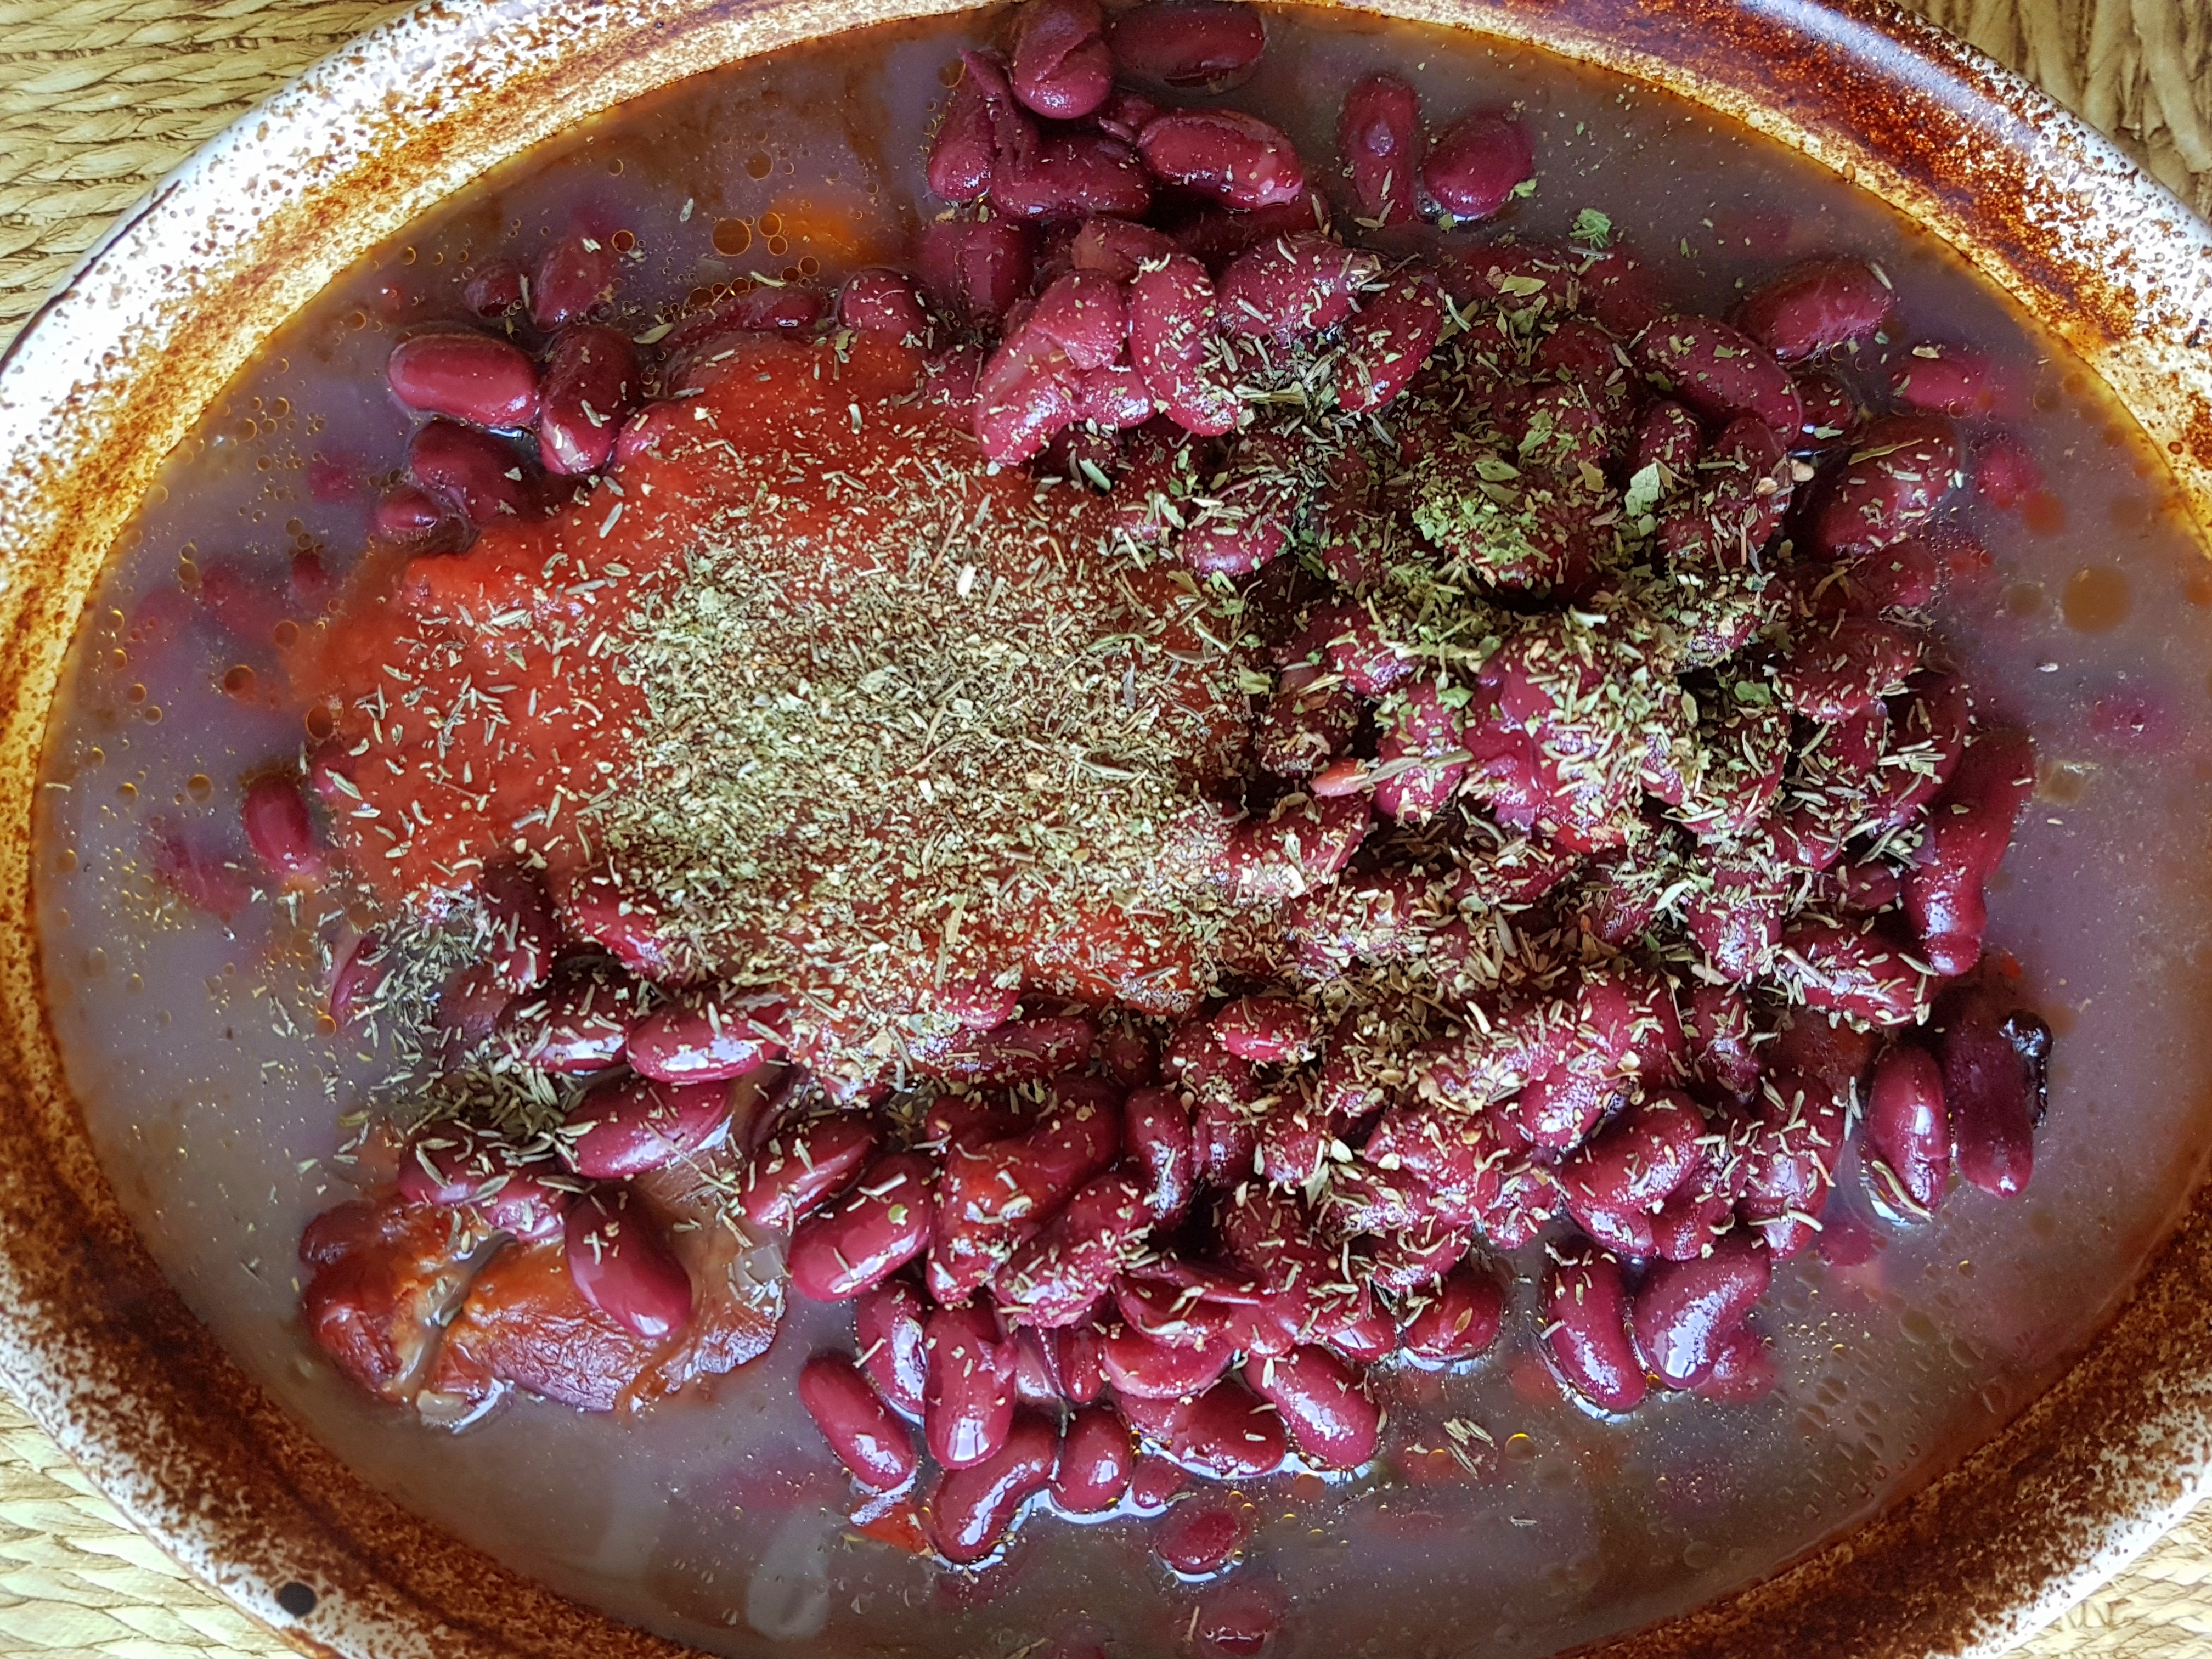 Pastrama din pulpa de porc afumata cu fasole rosie la cuptor